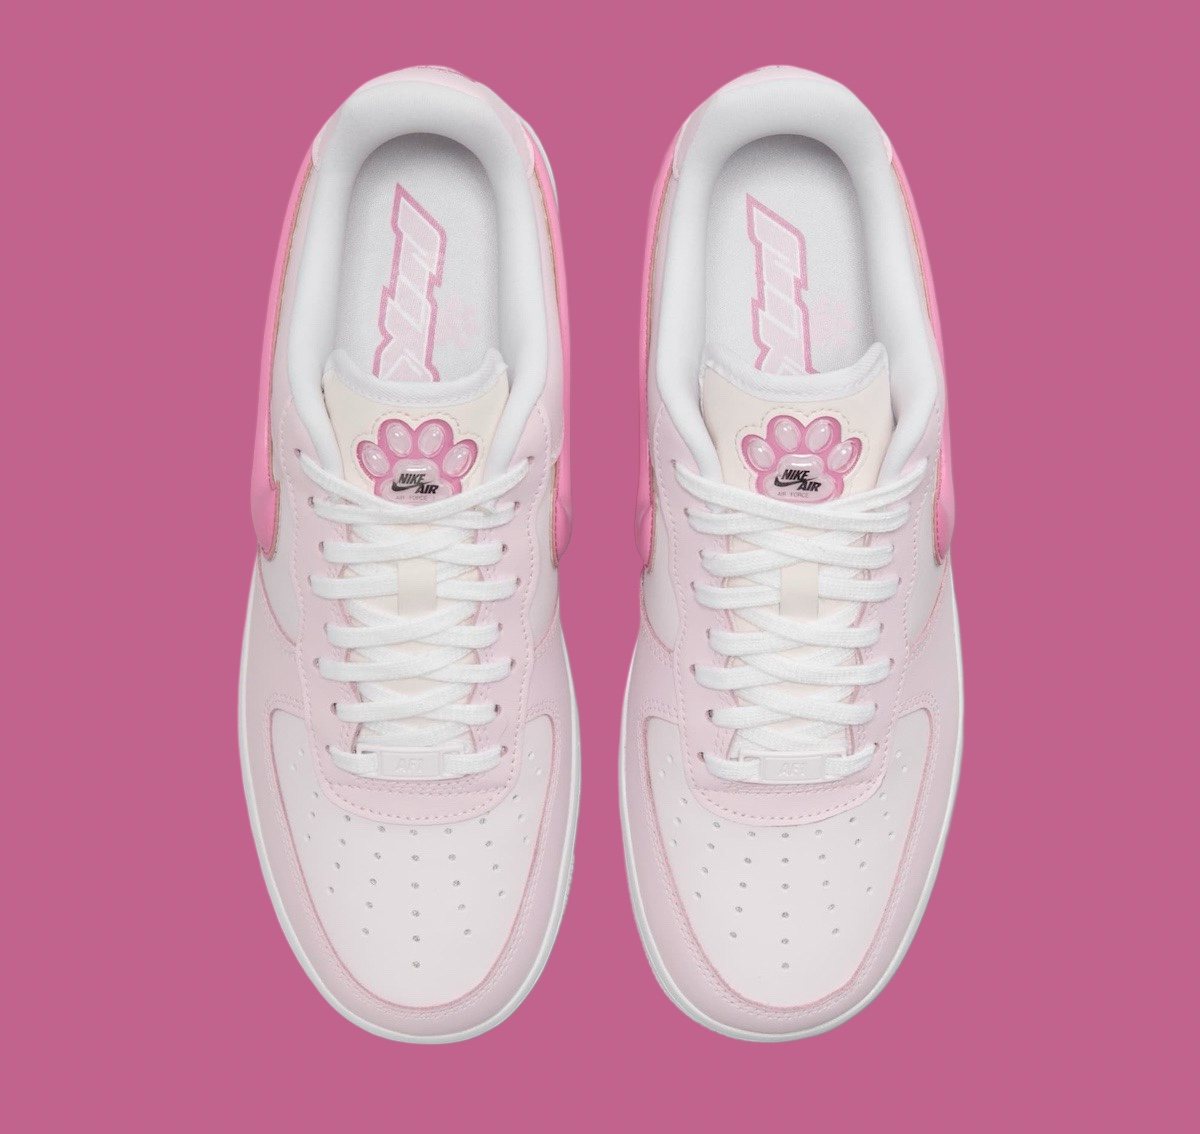 Nike Air Force 1 Low Paw Print White Pink HM3696 661 3